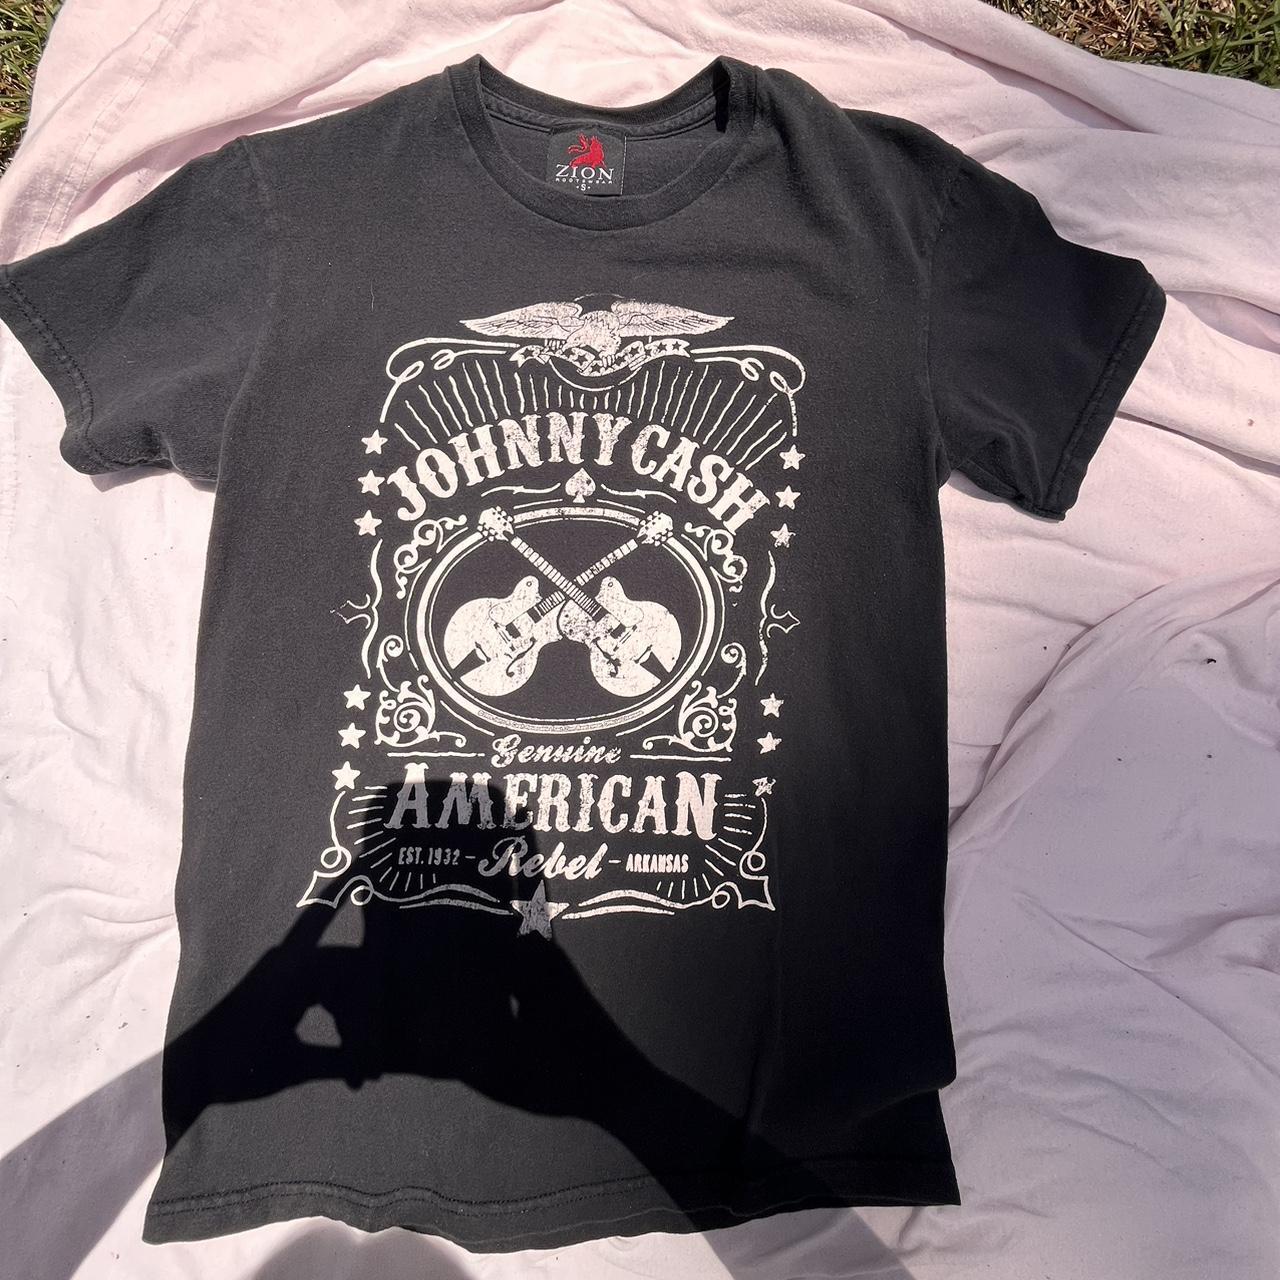 Country Road Women's Black T-shirt